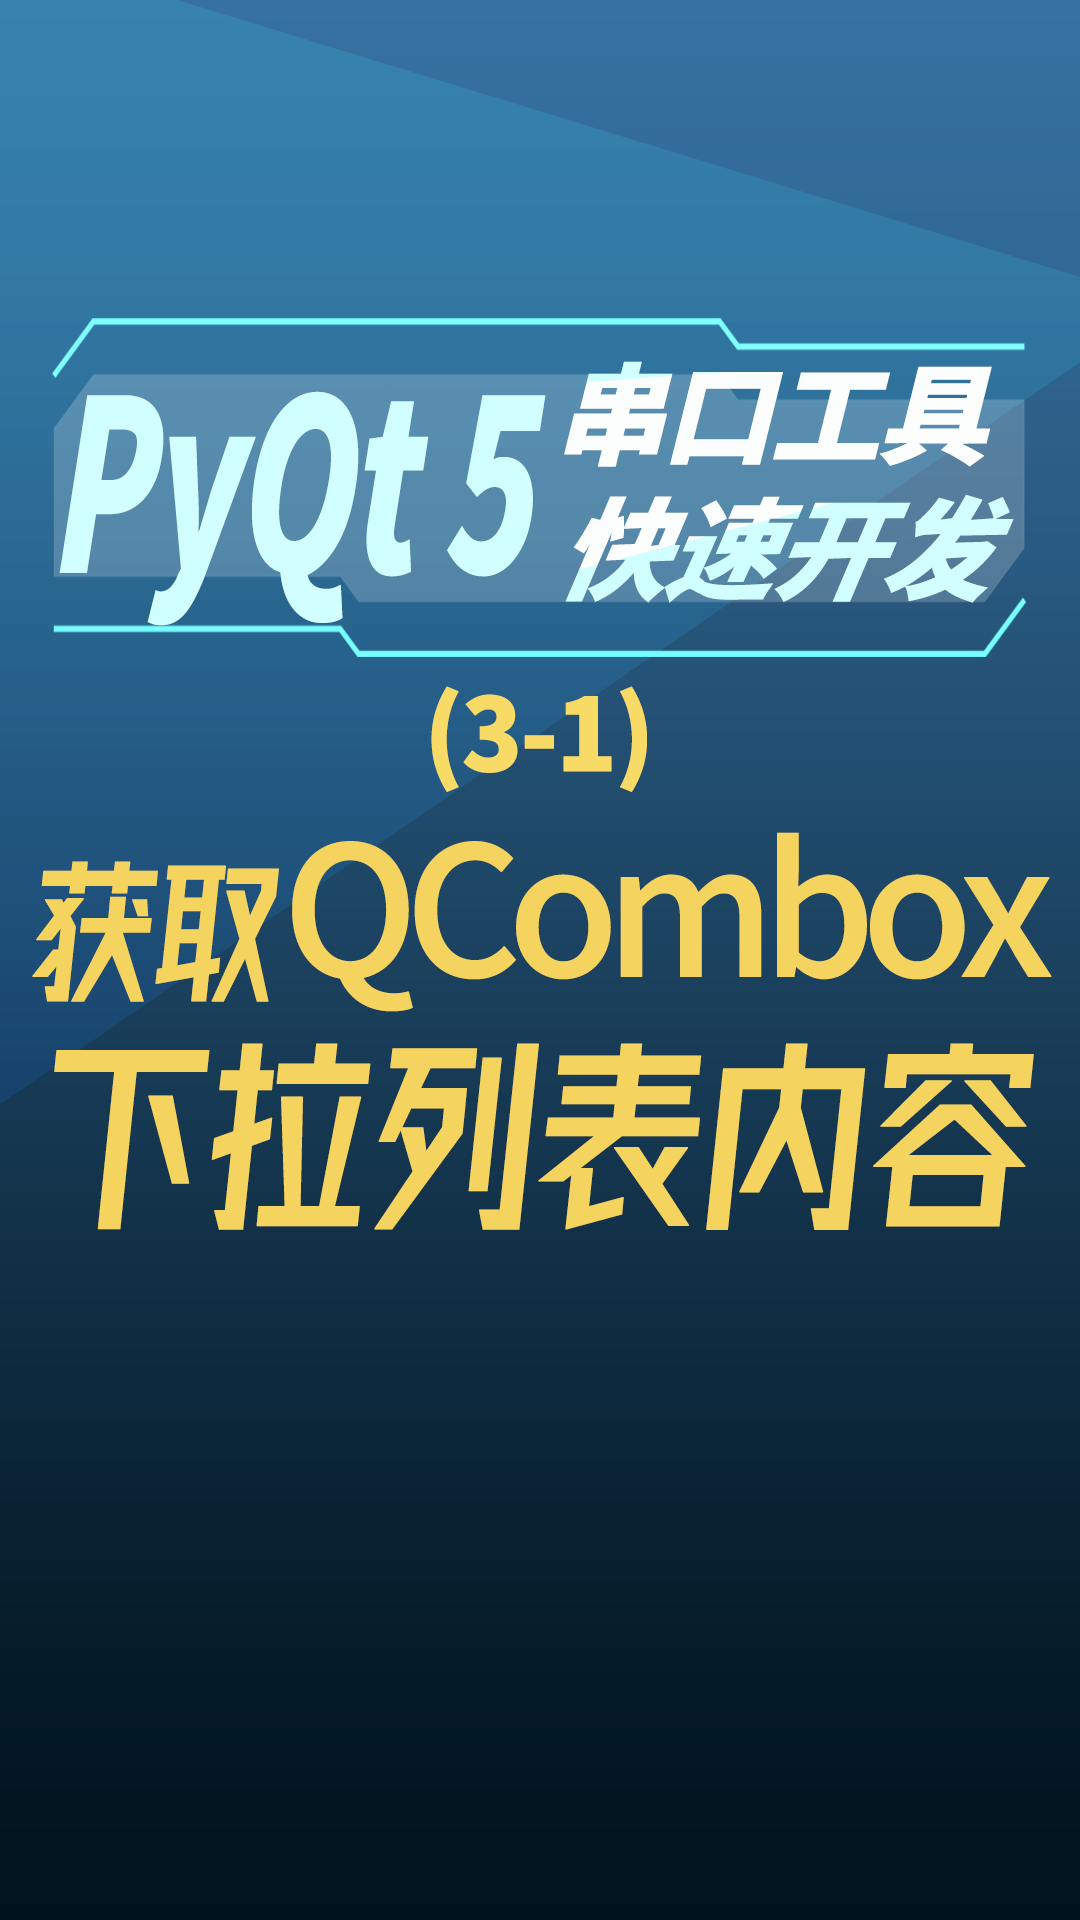 pyqt5串口工具快速开发3-1获取QCombox下拉列表内容#串口工具开发 